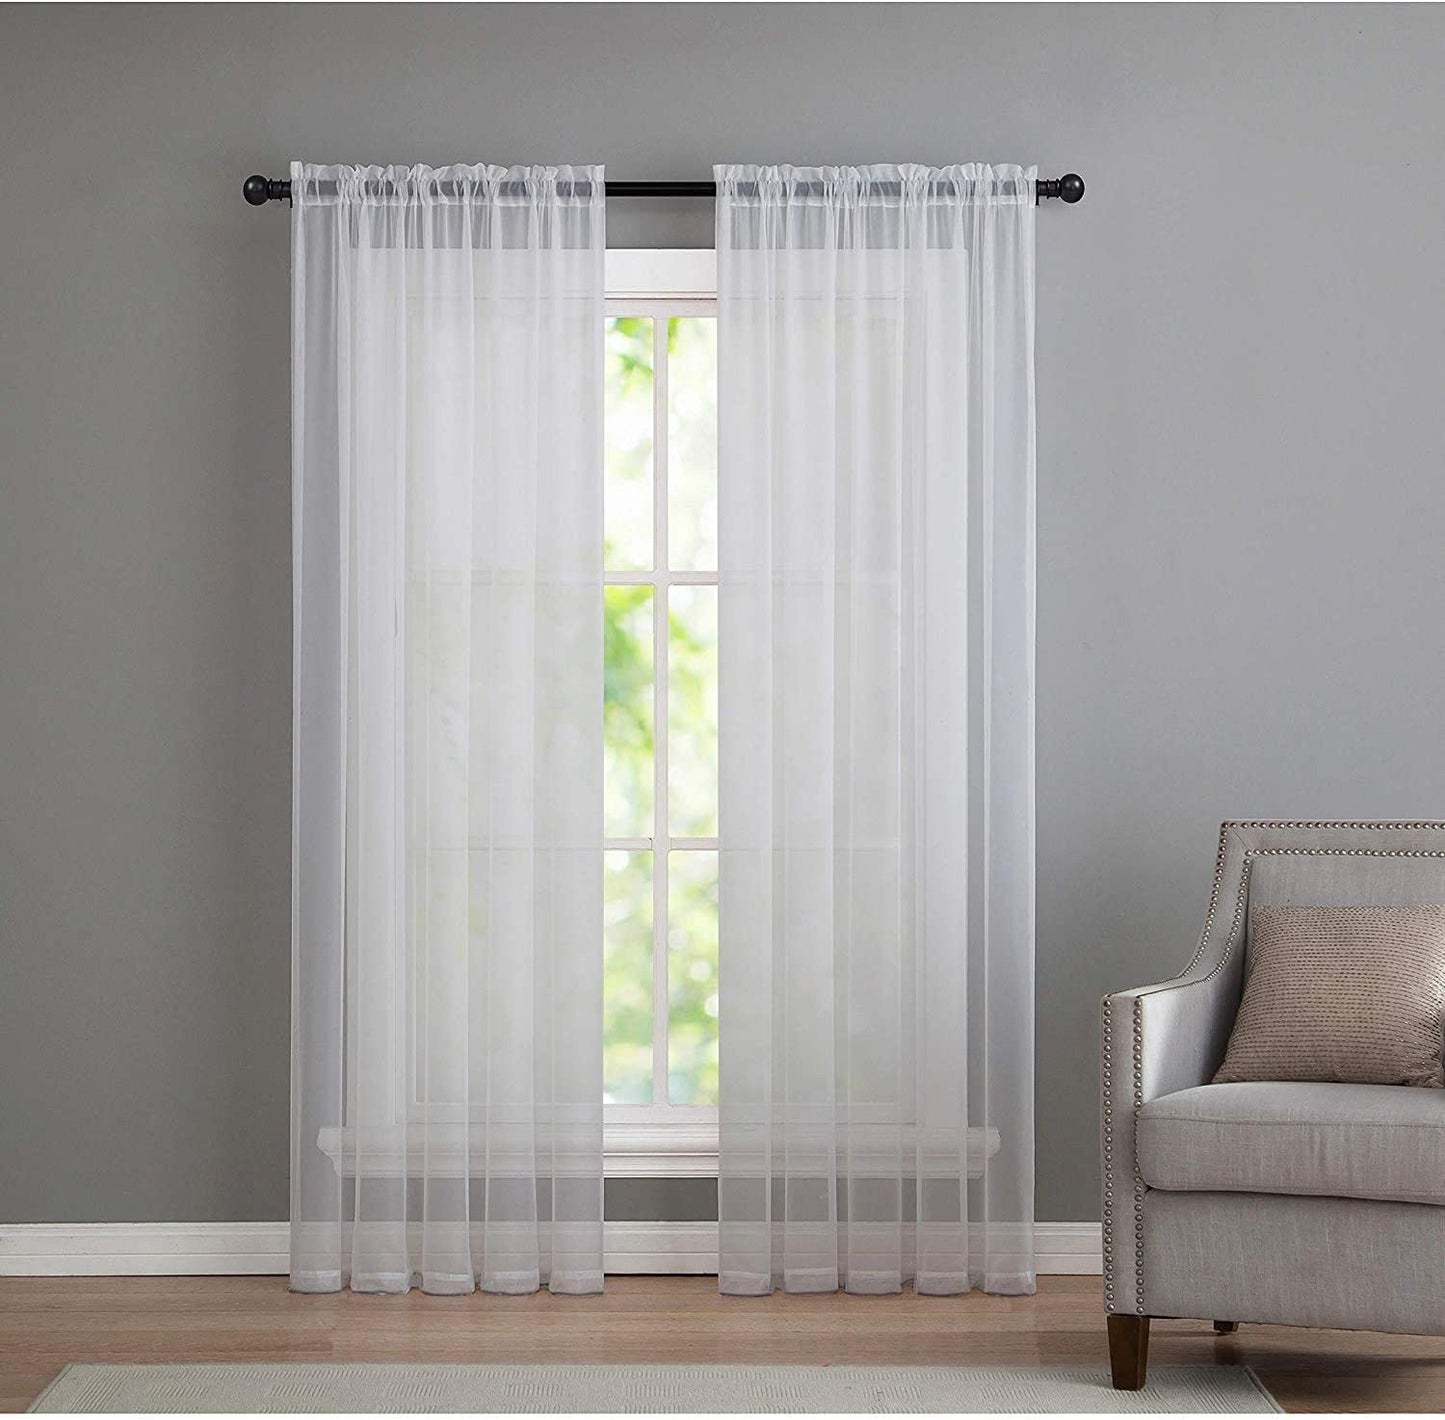 Goodgram 2 Pack: Basic Rod Pocket Sheer Voile Window Curtain Panels - Assorted Colors (White, 84 In. Long)  Goodgram White Contemporary 95 In. Long